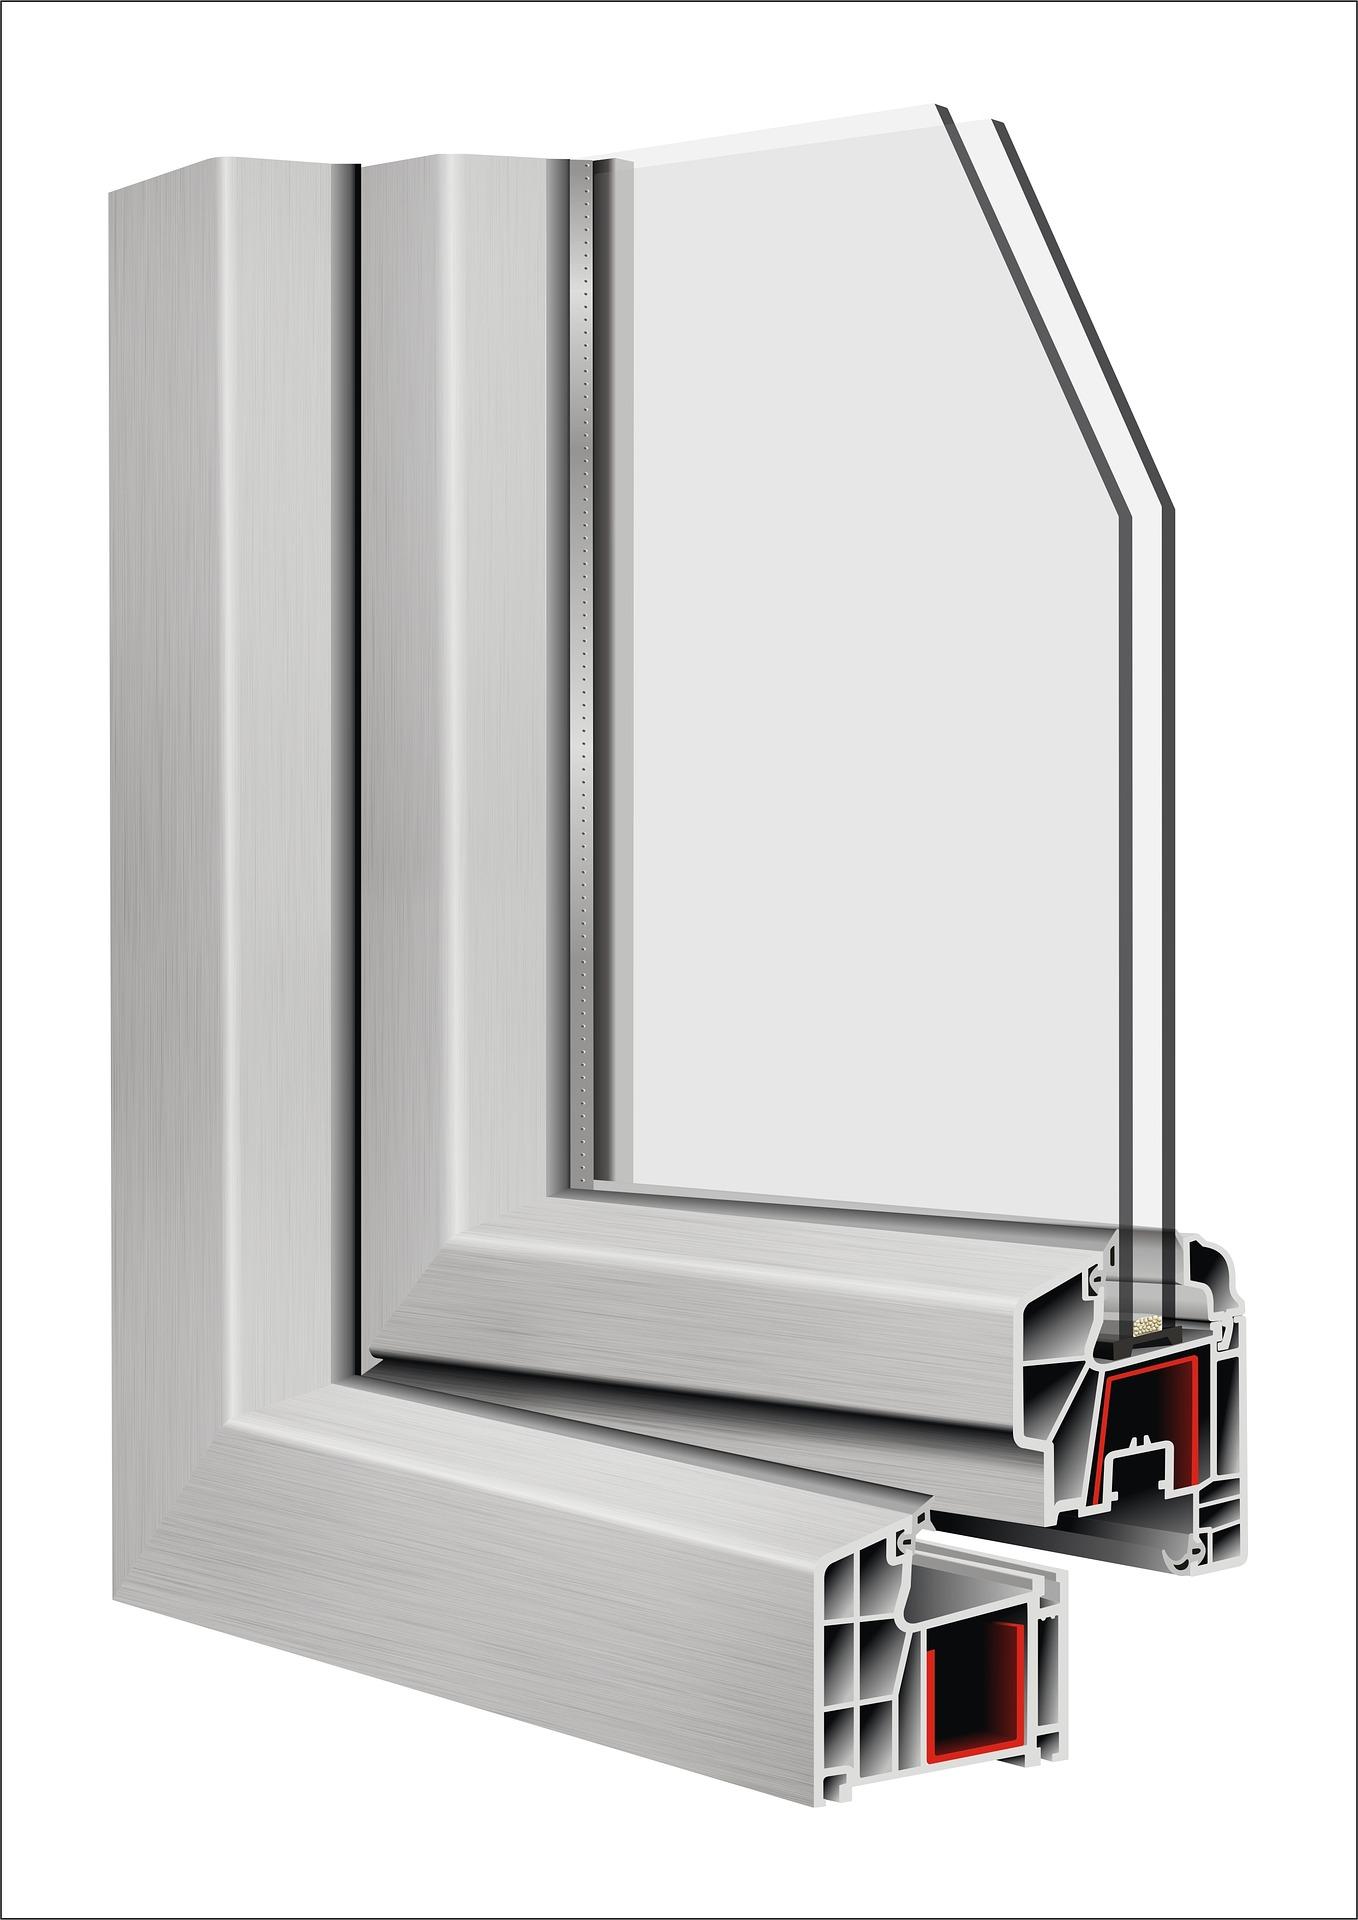 Okna PVC aluminiowe drewniane na wymiar różne kolory pcv okno, woj. pomorskie